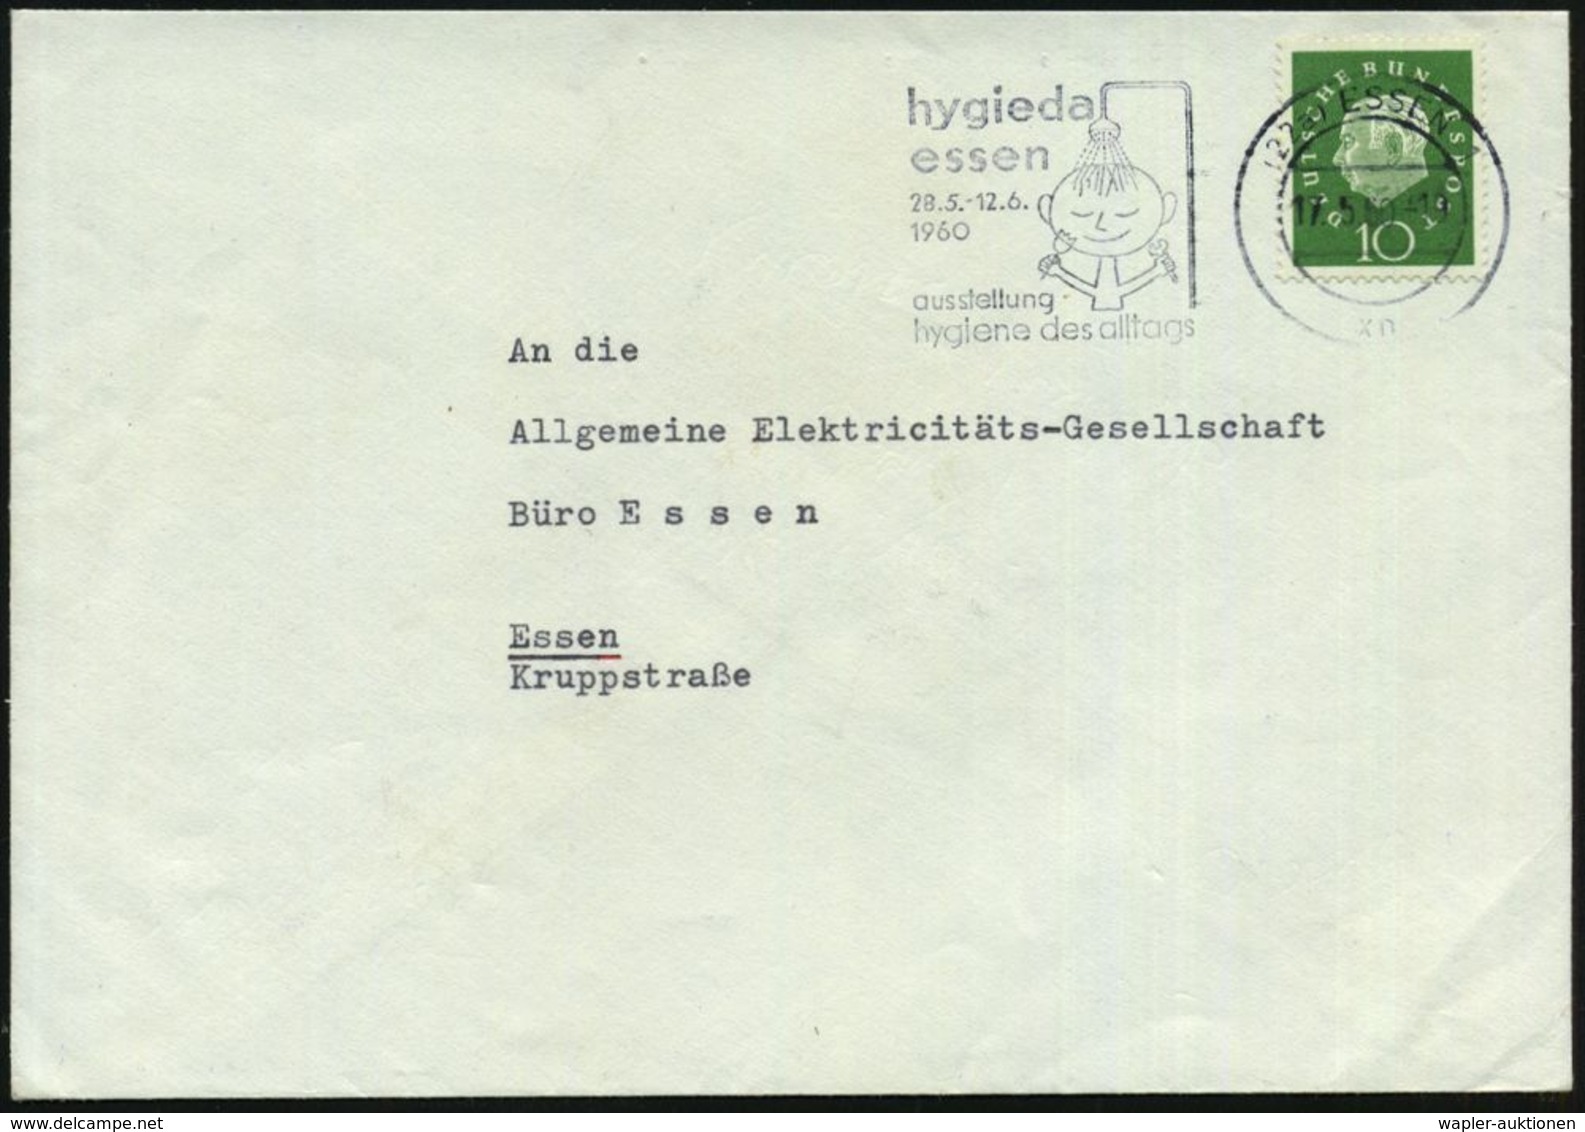 (22a) ESSEN 1/ Xn/ Hygieda/ ..ausstellung/ Hygiene Des Alltags 1960 (17.5.) MWSt (= Kind Unter Dusche) Bedarfs-Bf. (Bo.1 - Farmacia